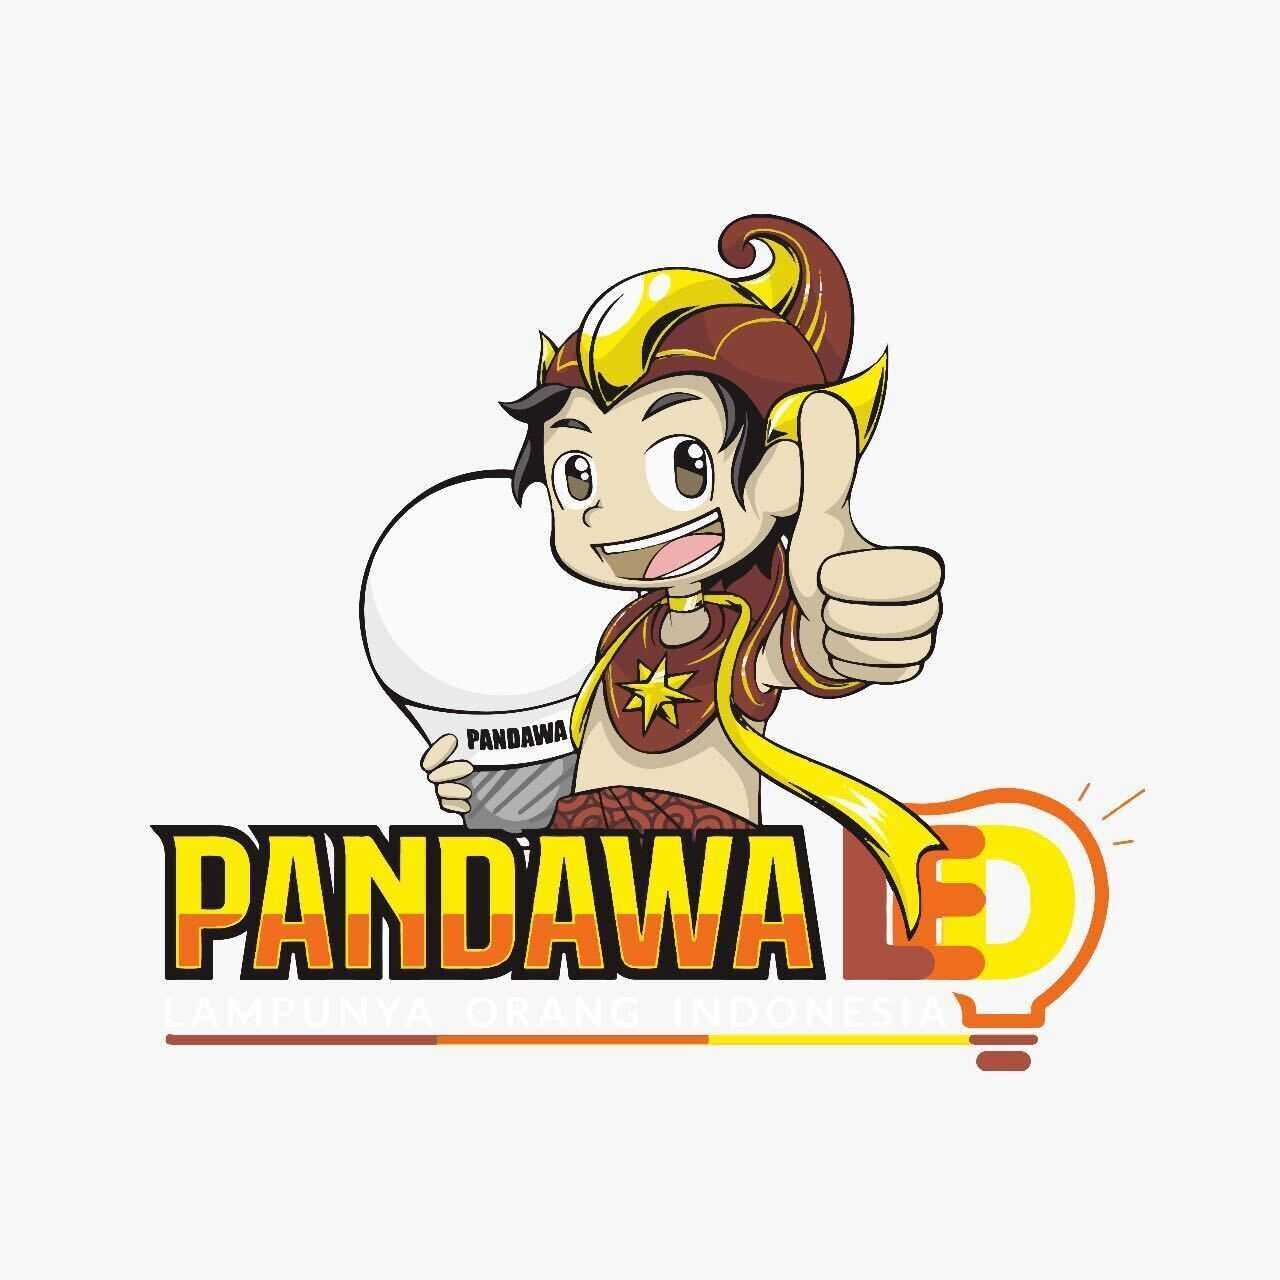 PT Pandawa LED Indonesia